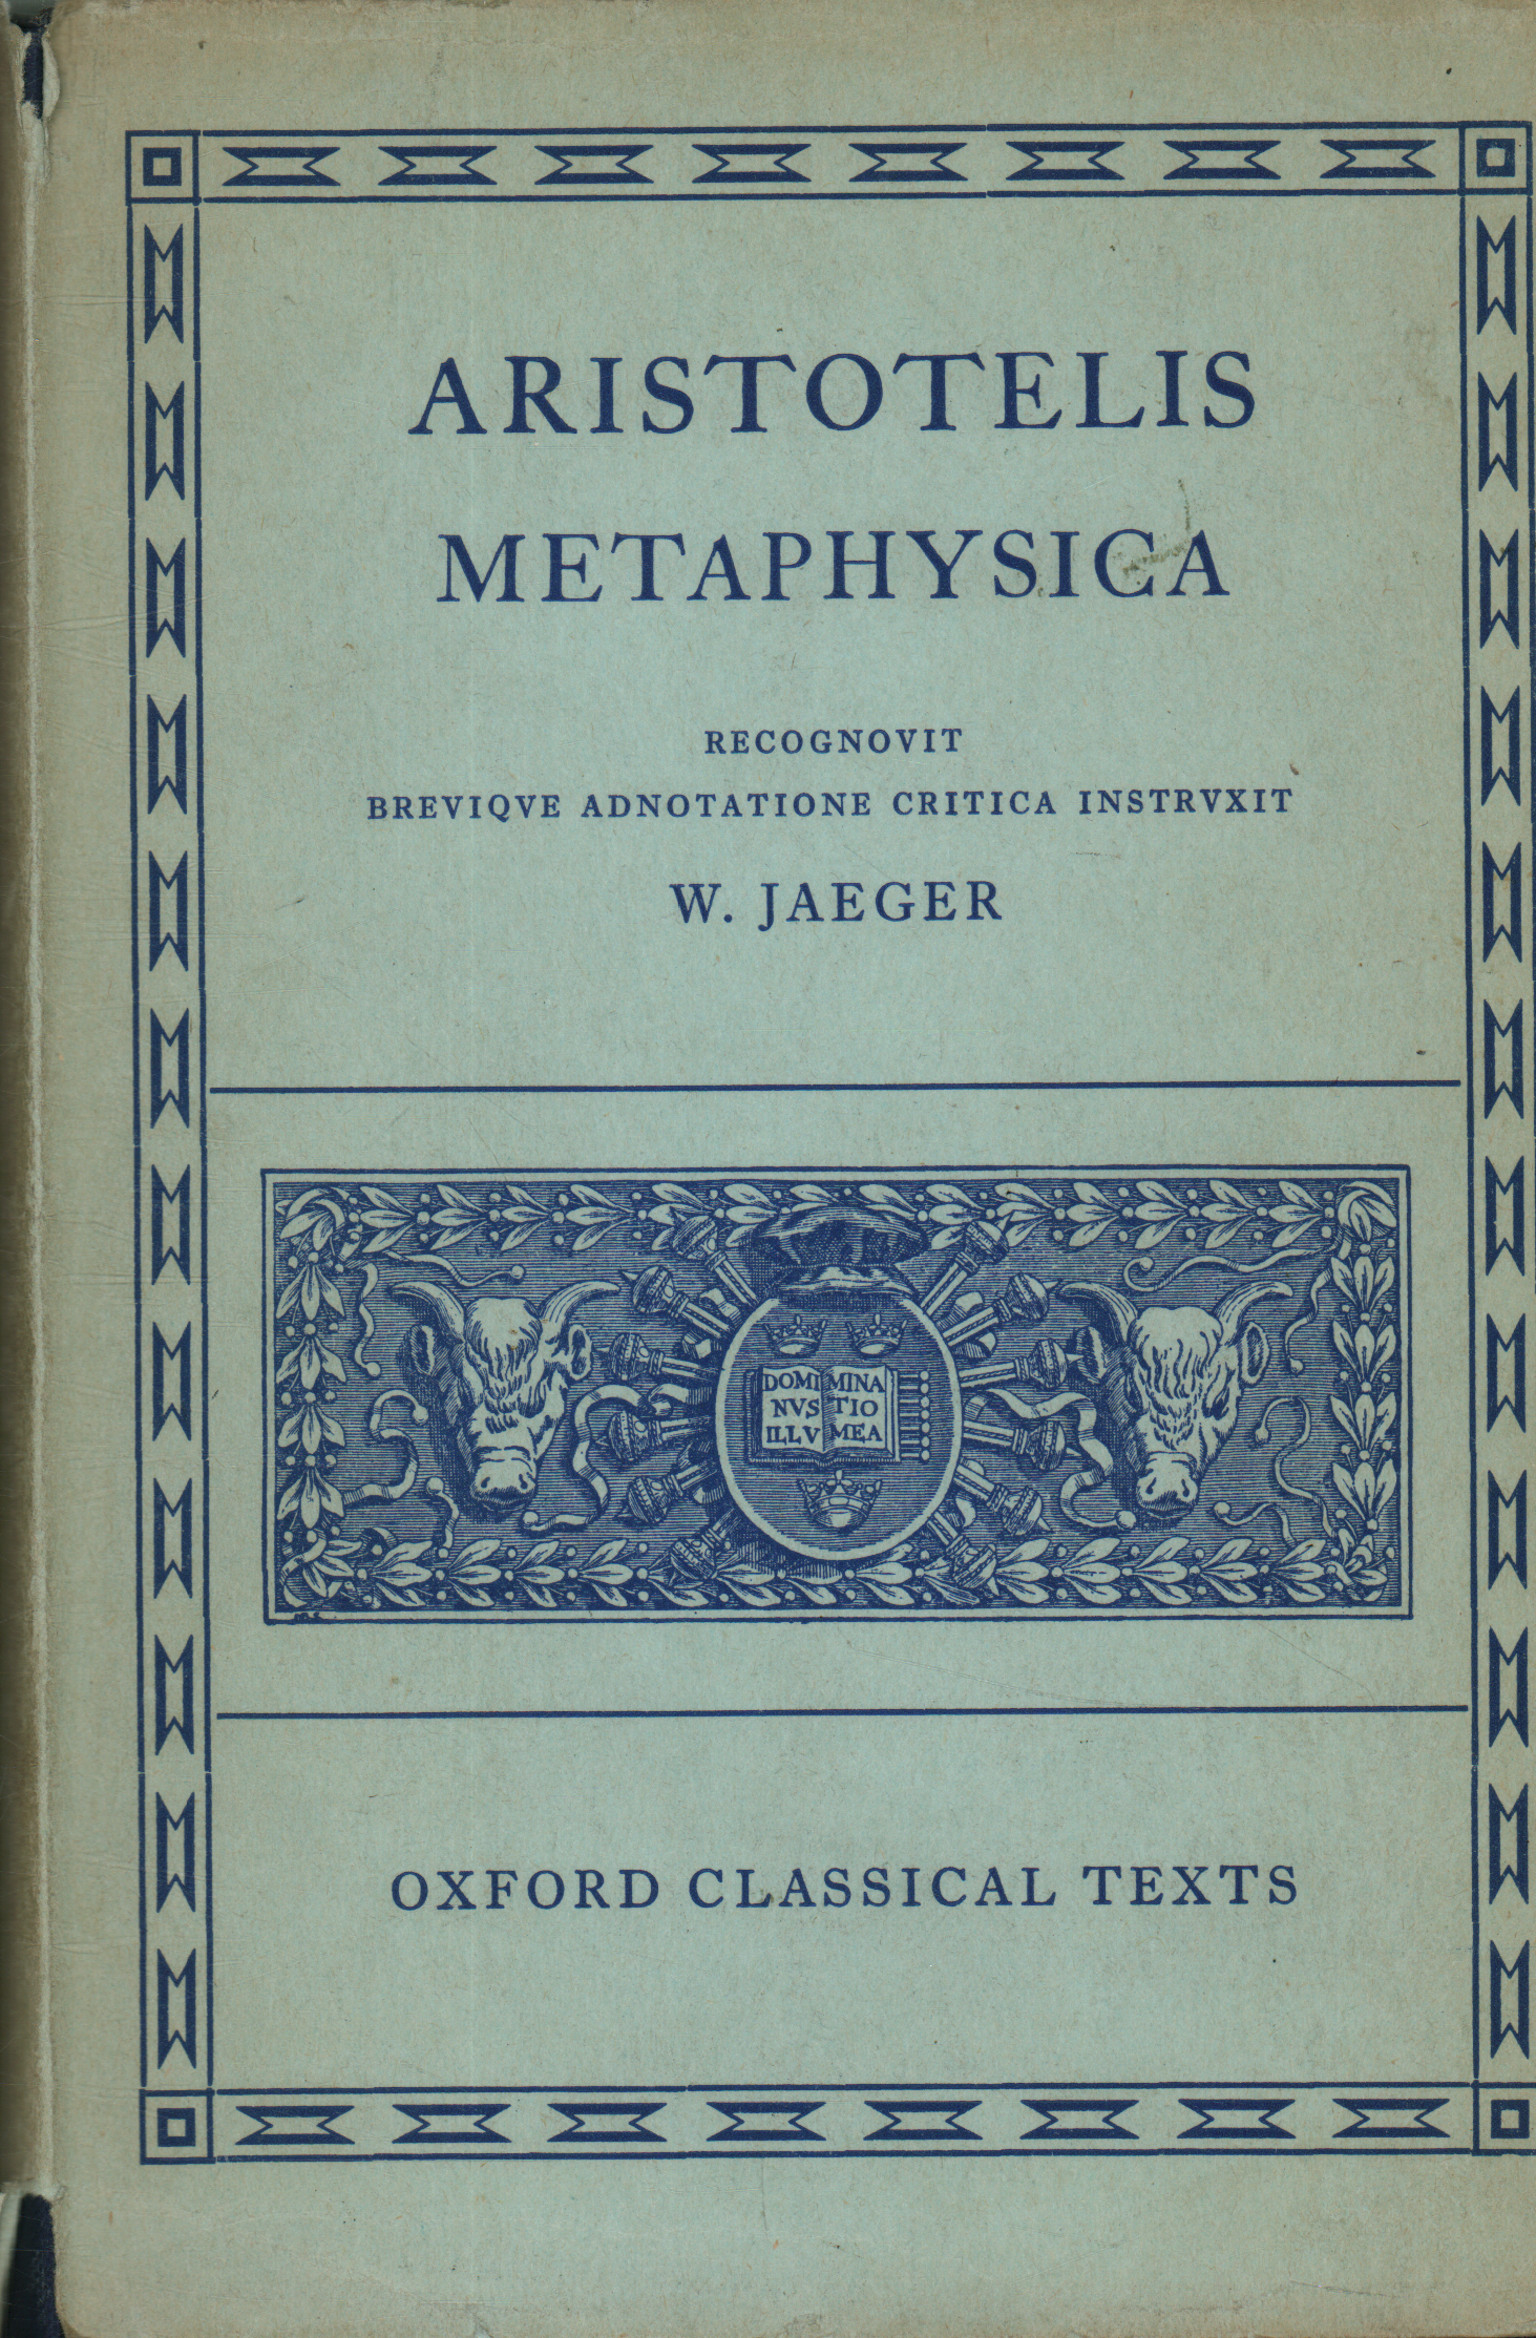 Methaphysica, Aristotelis